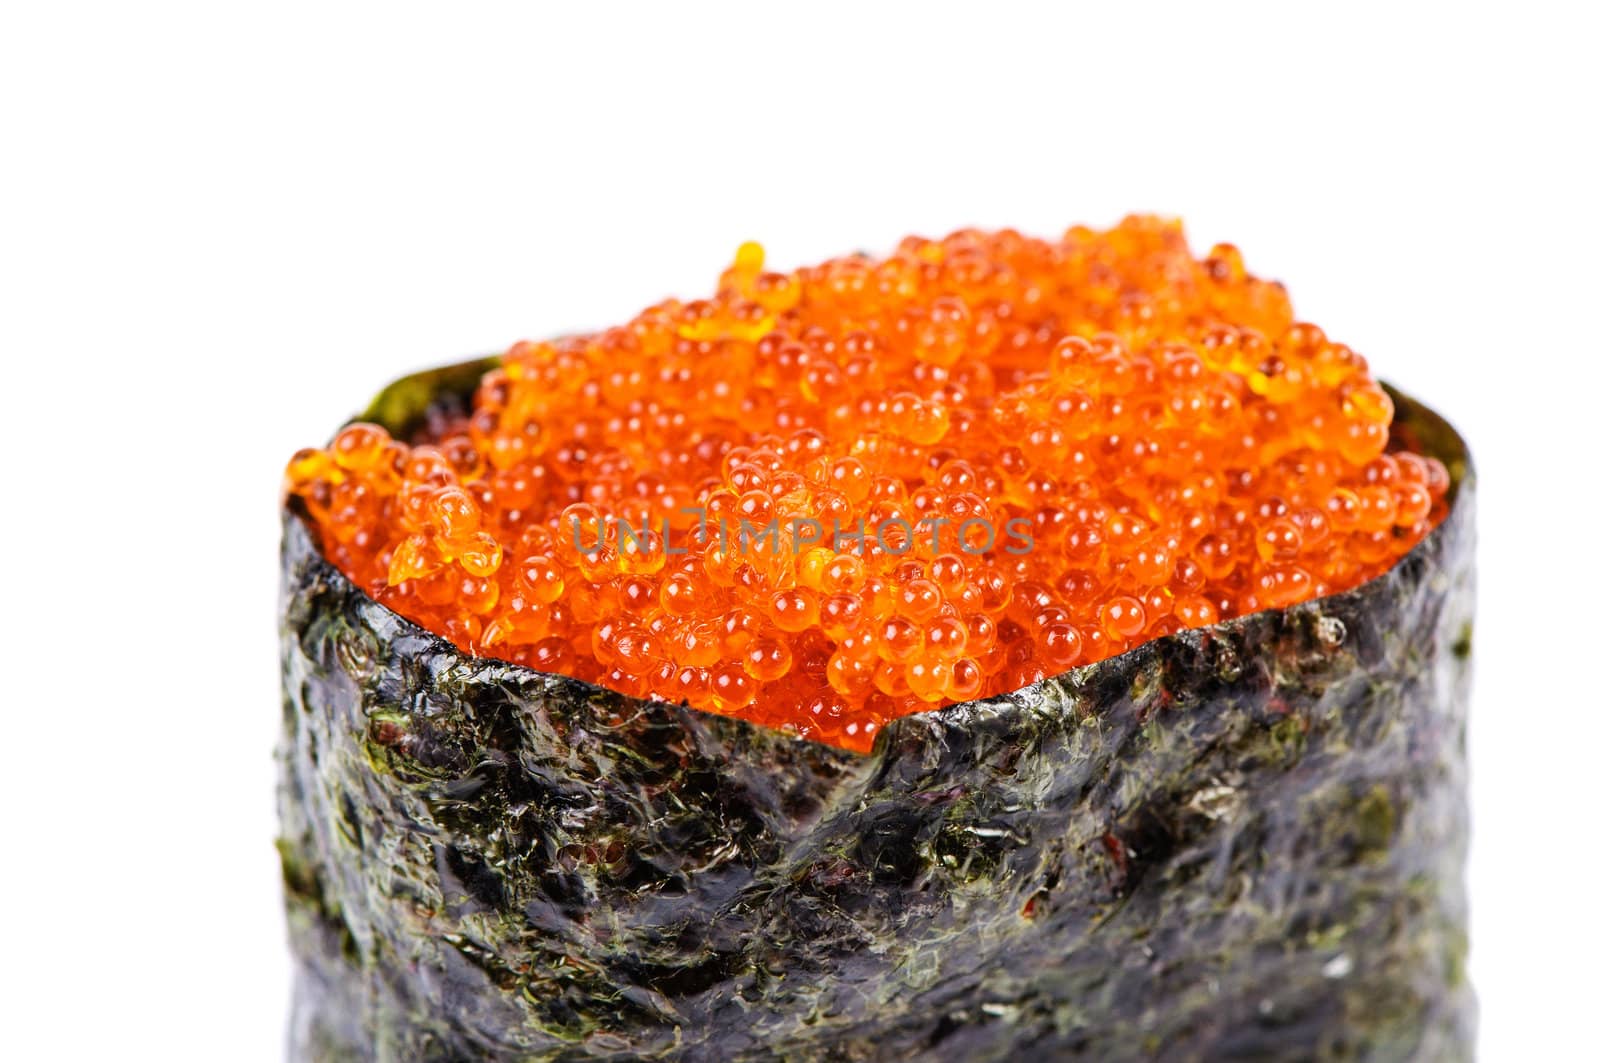 Tobiko Gunkan Sushi with Fish Roe on white background isolated